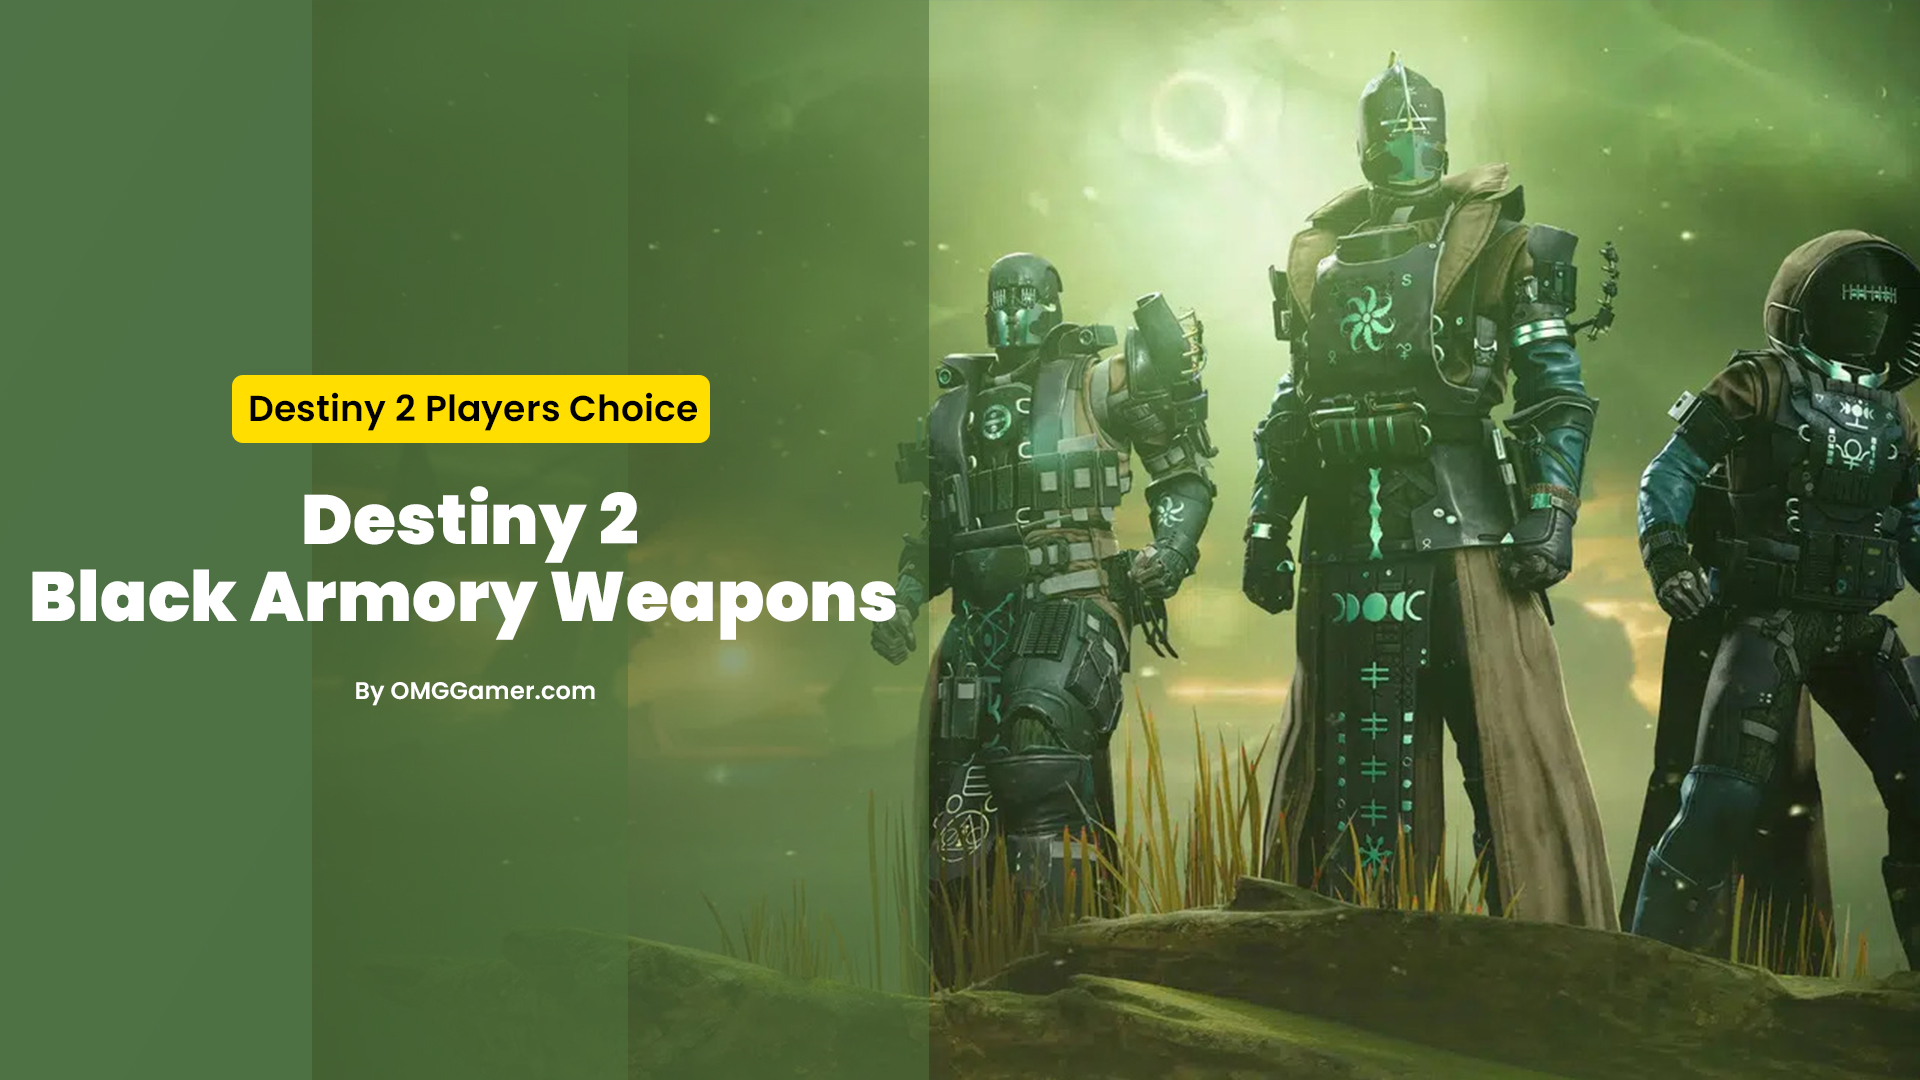 Destiny 2 Black Armory Weapons